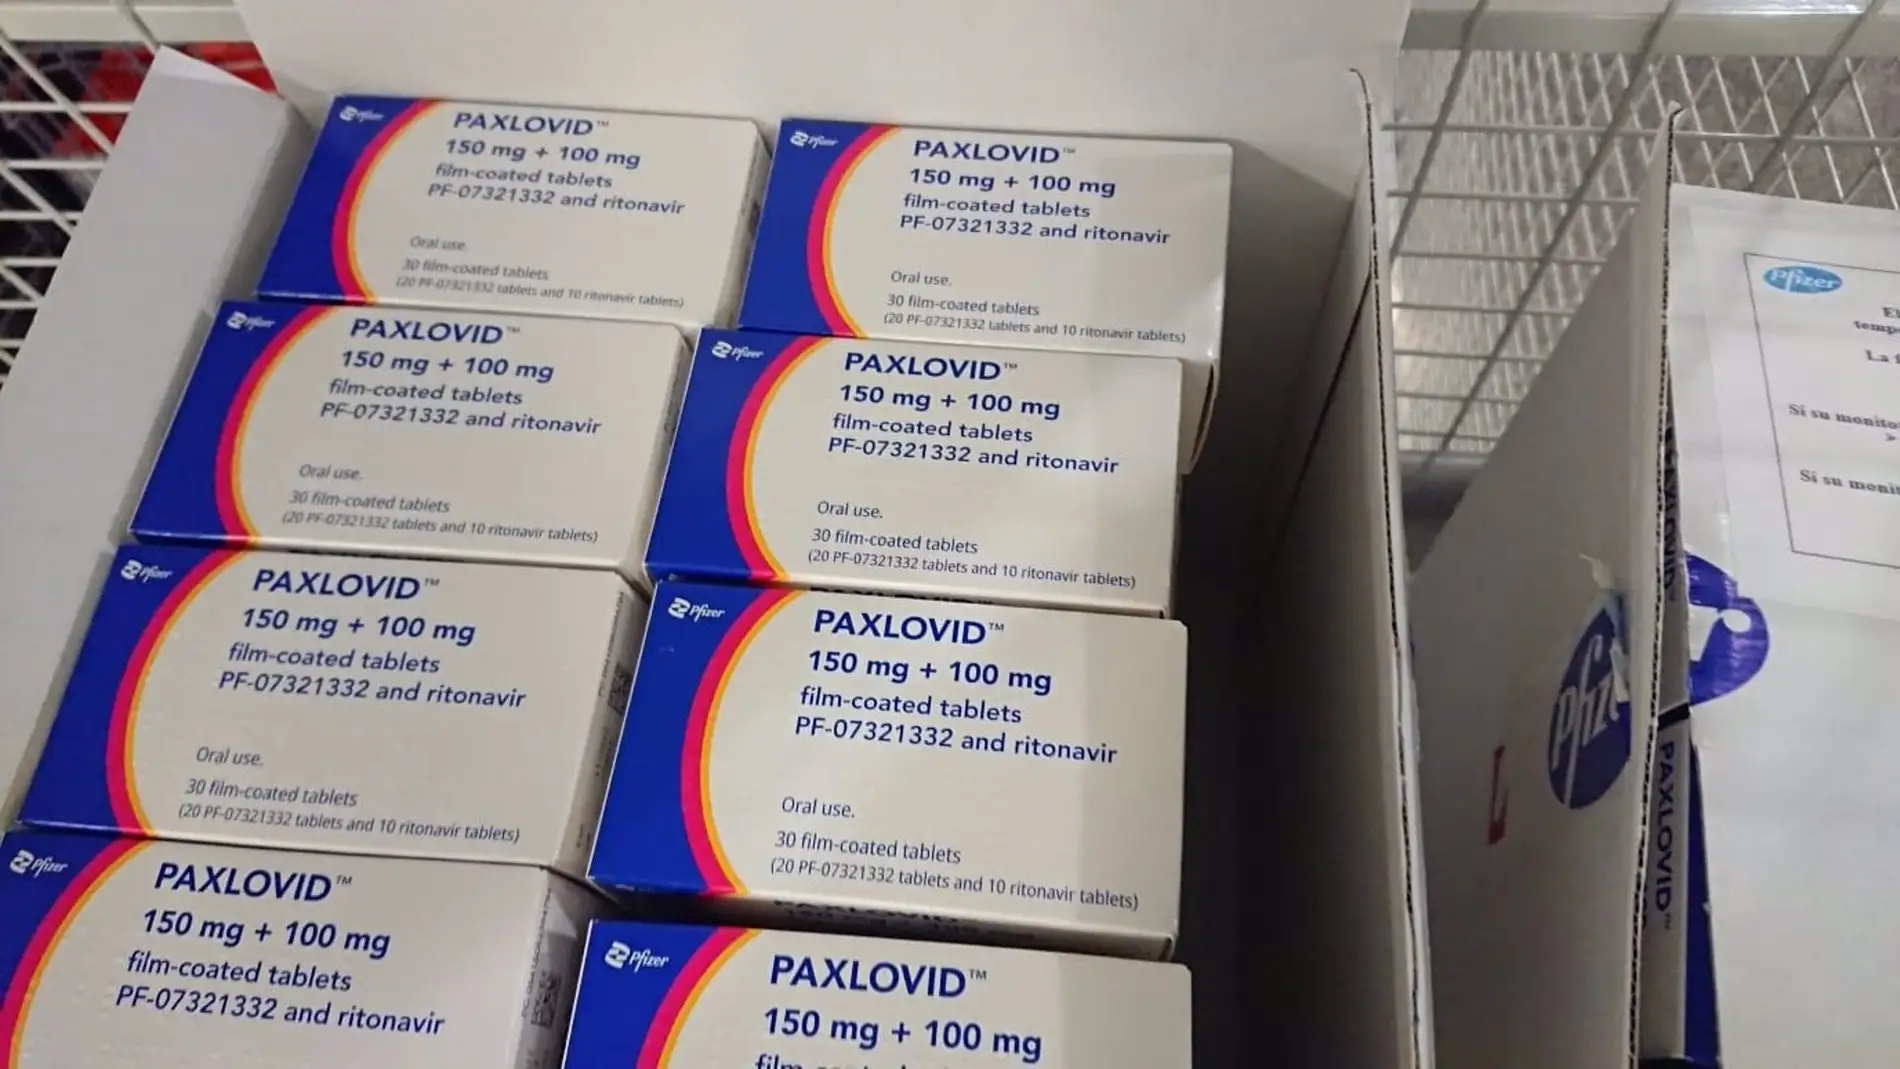 Cajas de Paxlovid